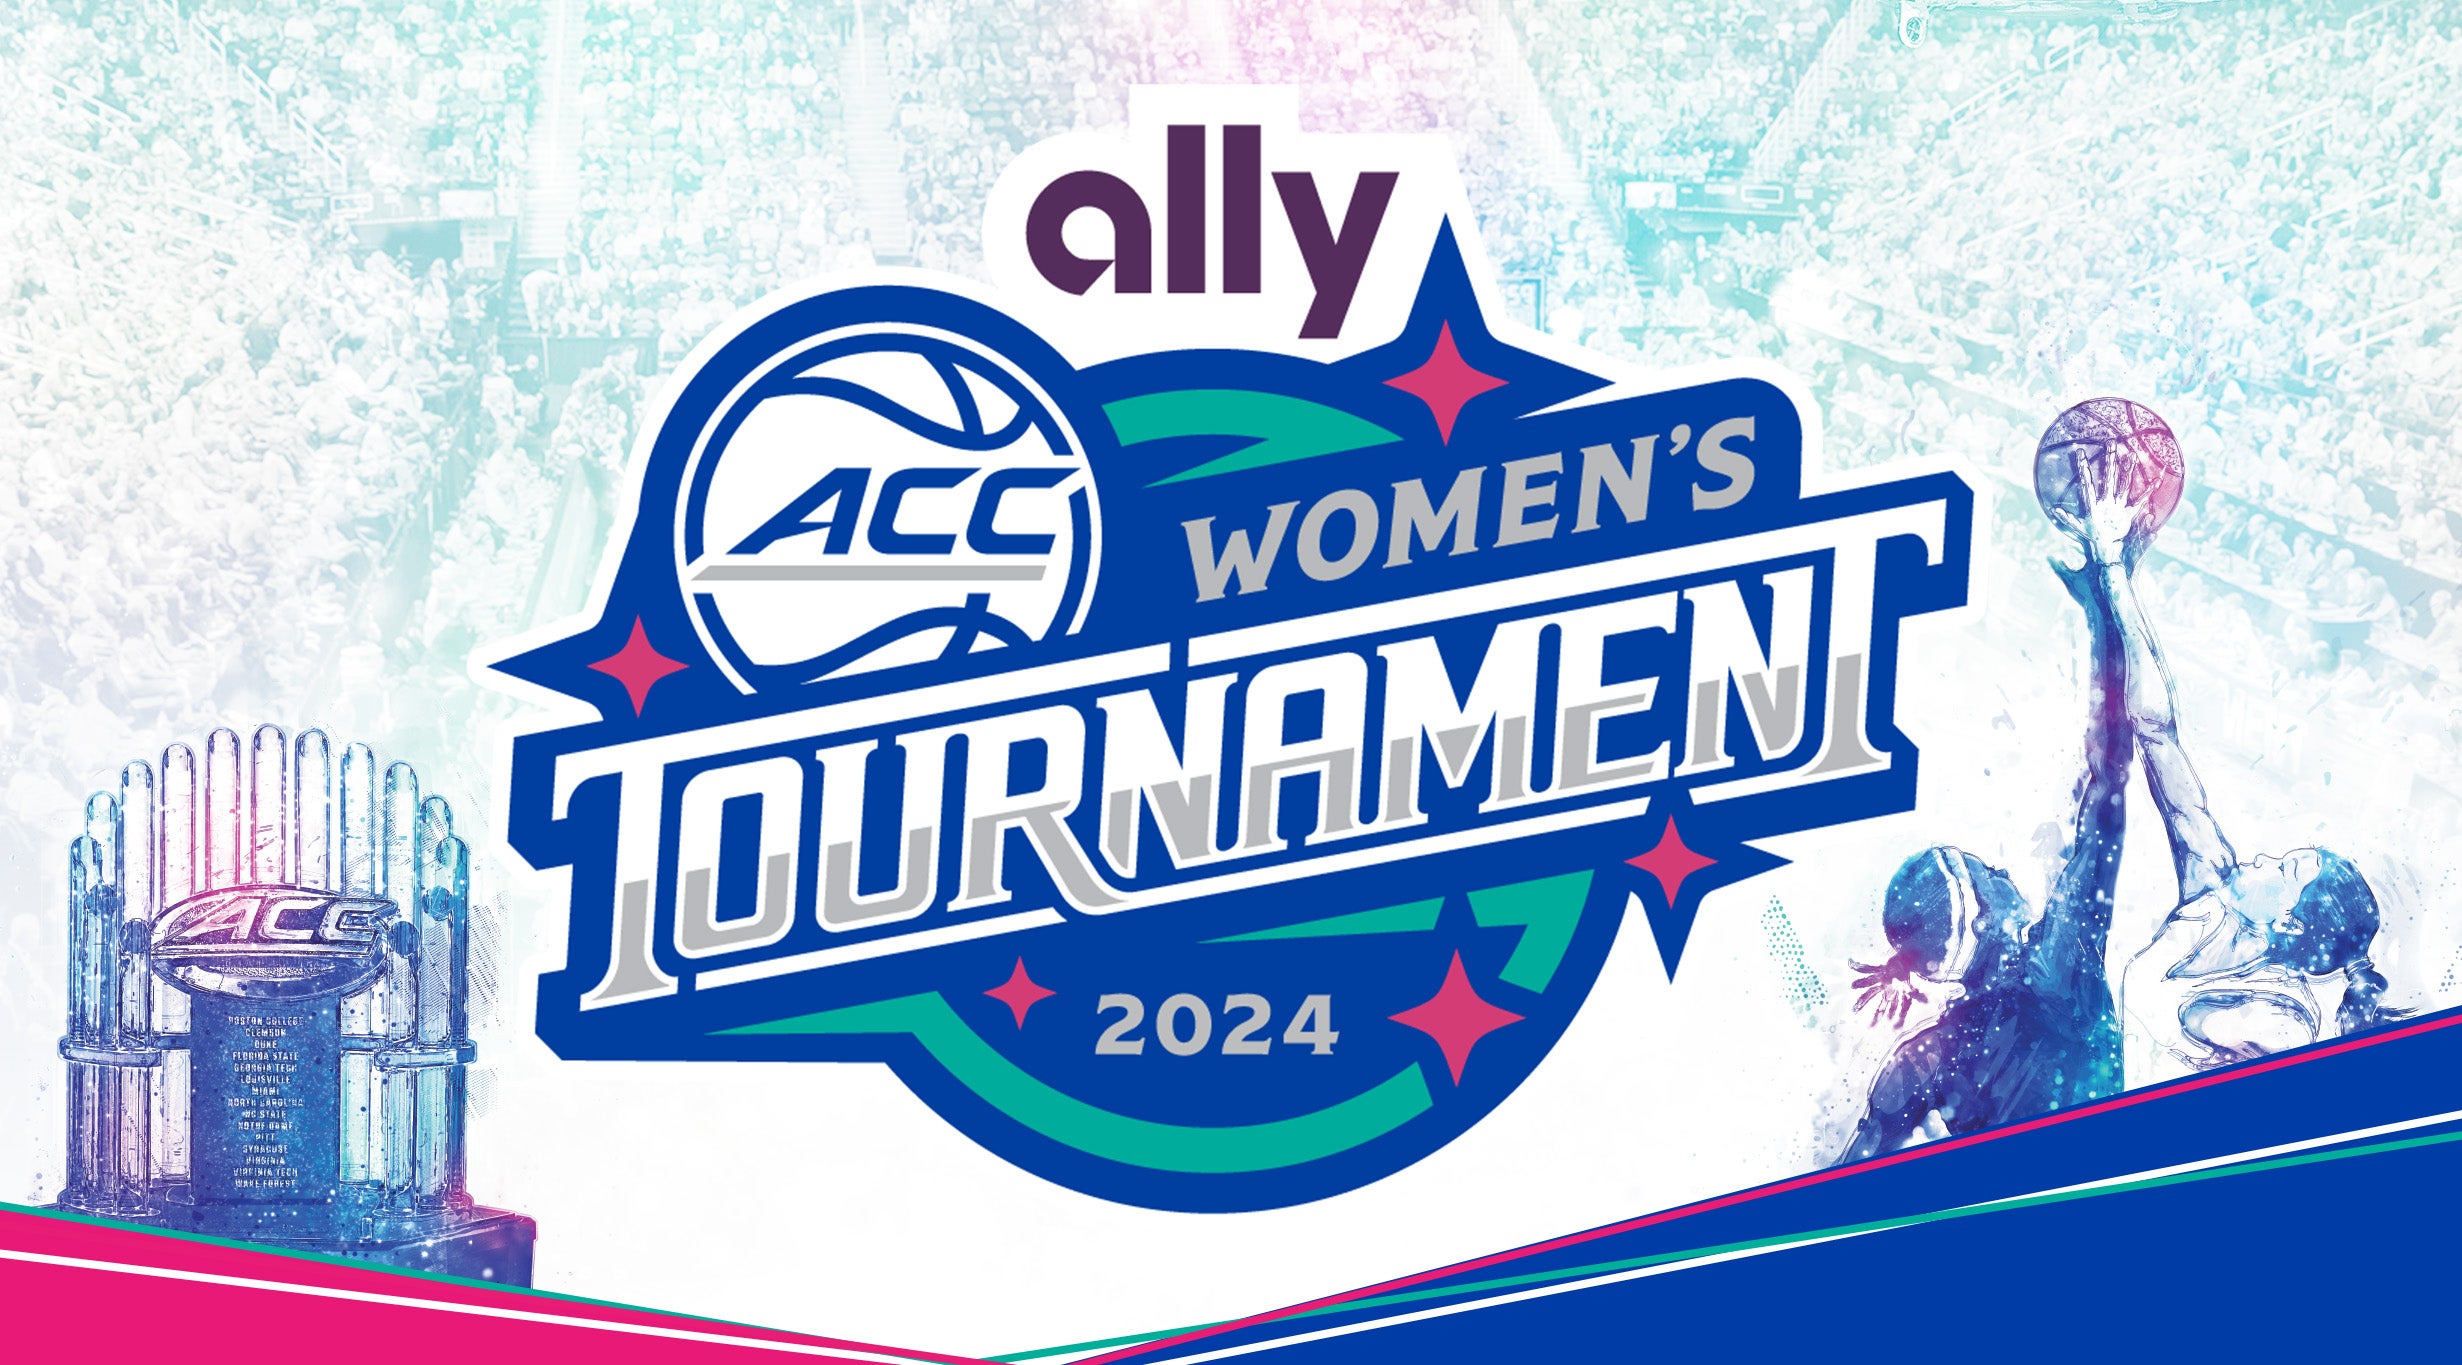 Ally ACC Womens Basketball Tournament Session 3 in Greensboro promo photo for Venue presale offer code